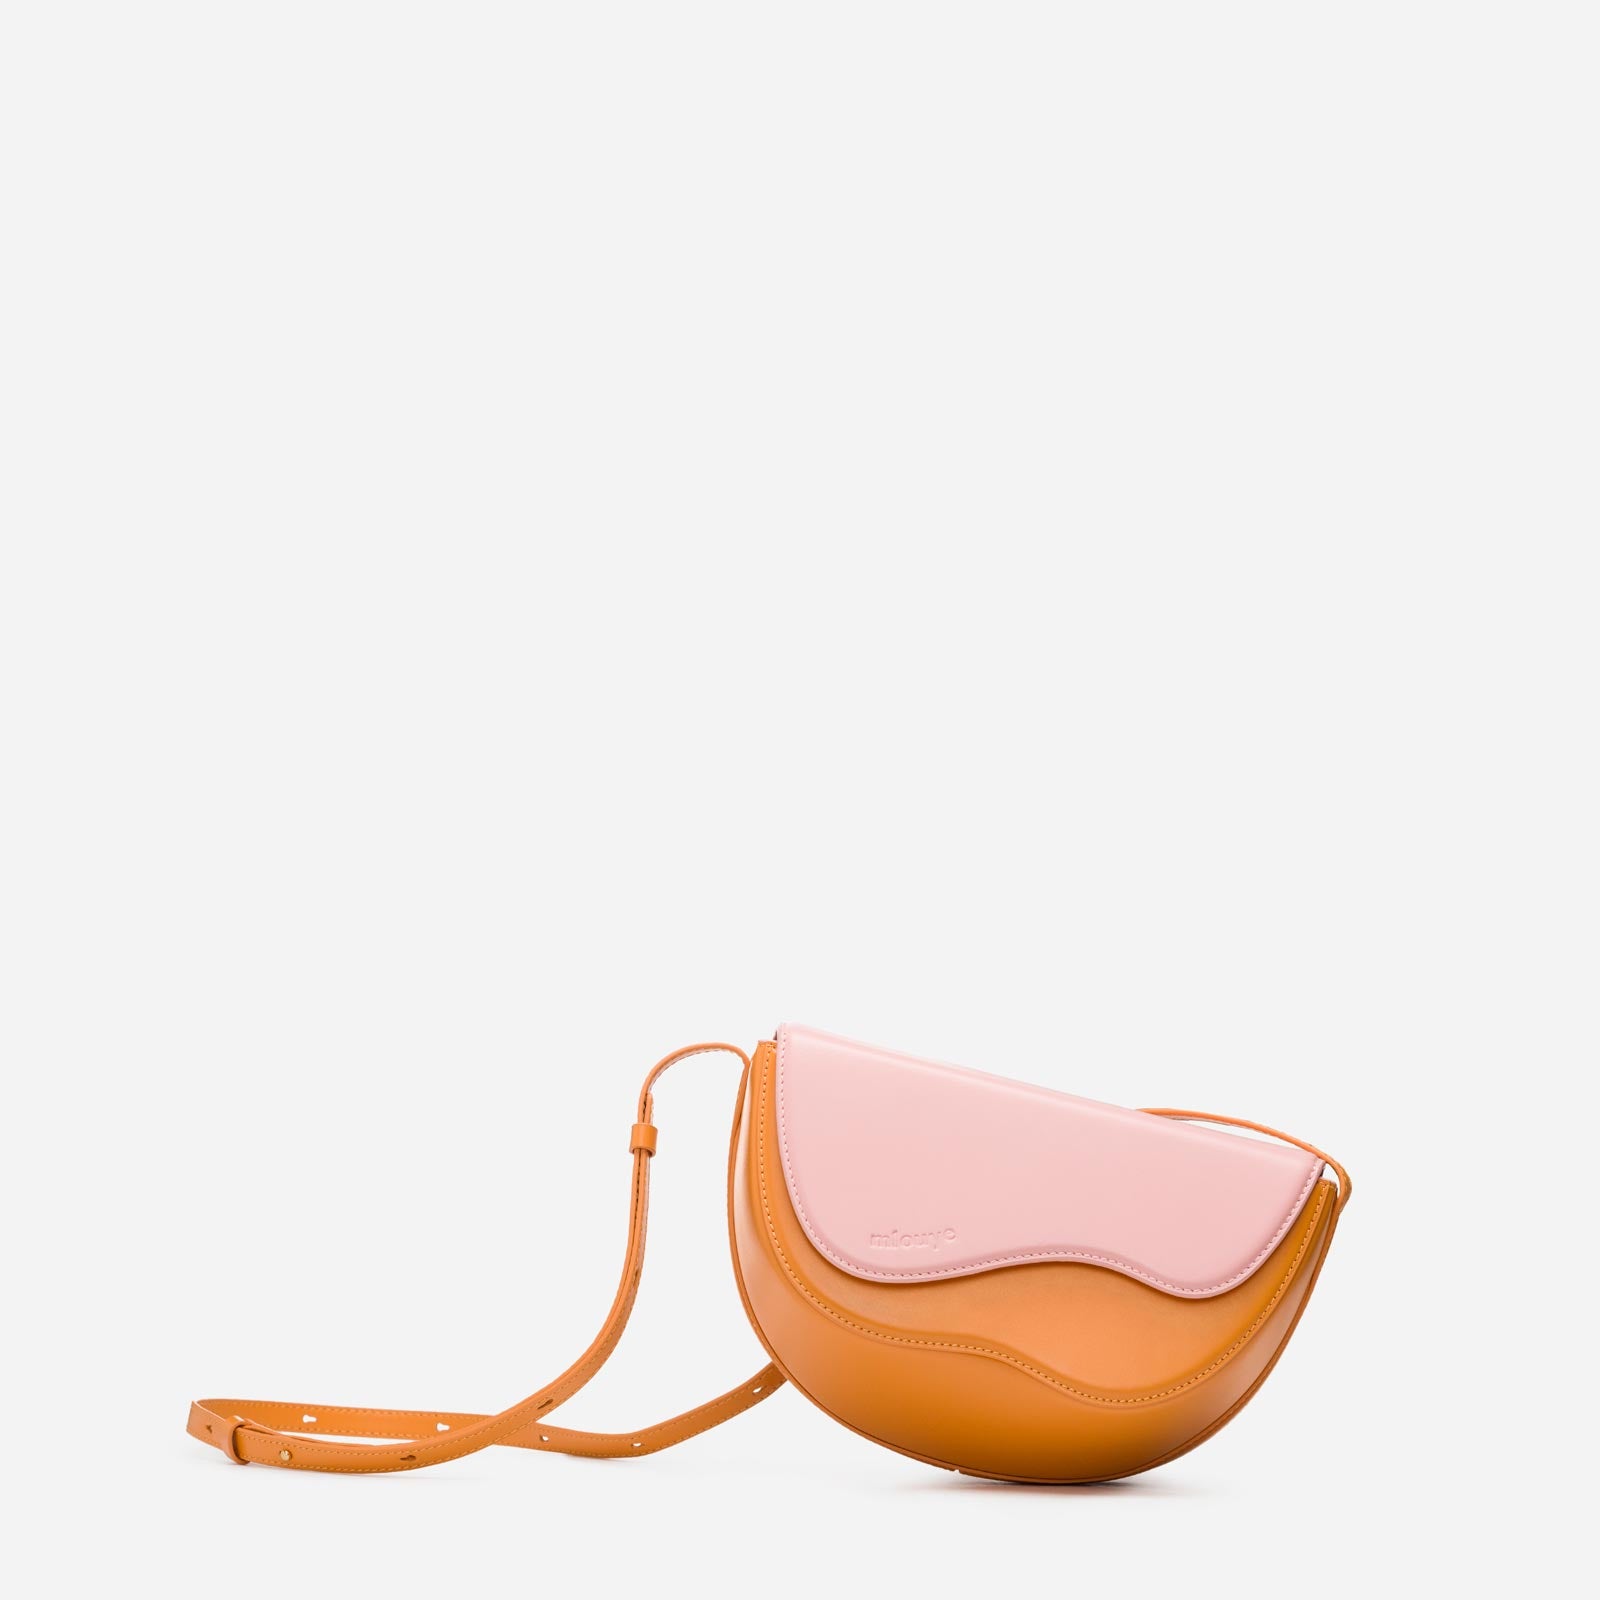 Wave - Apricot